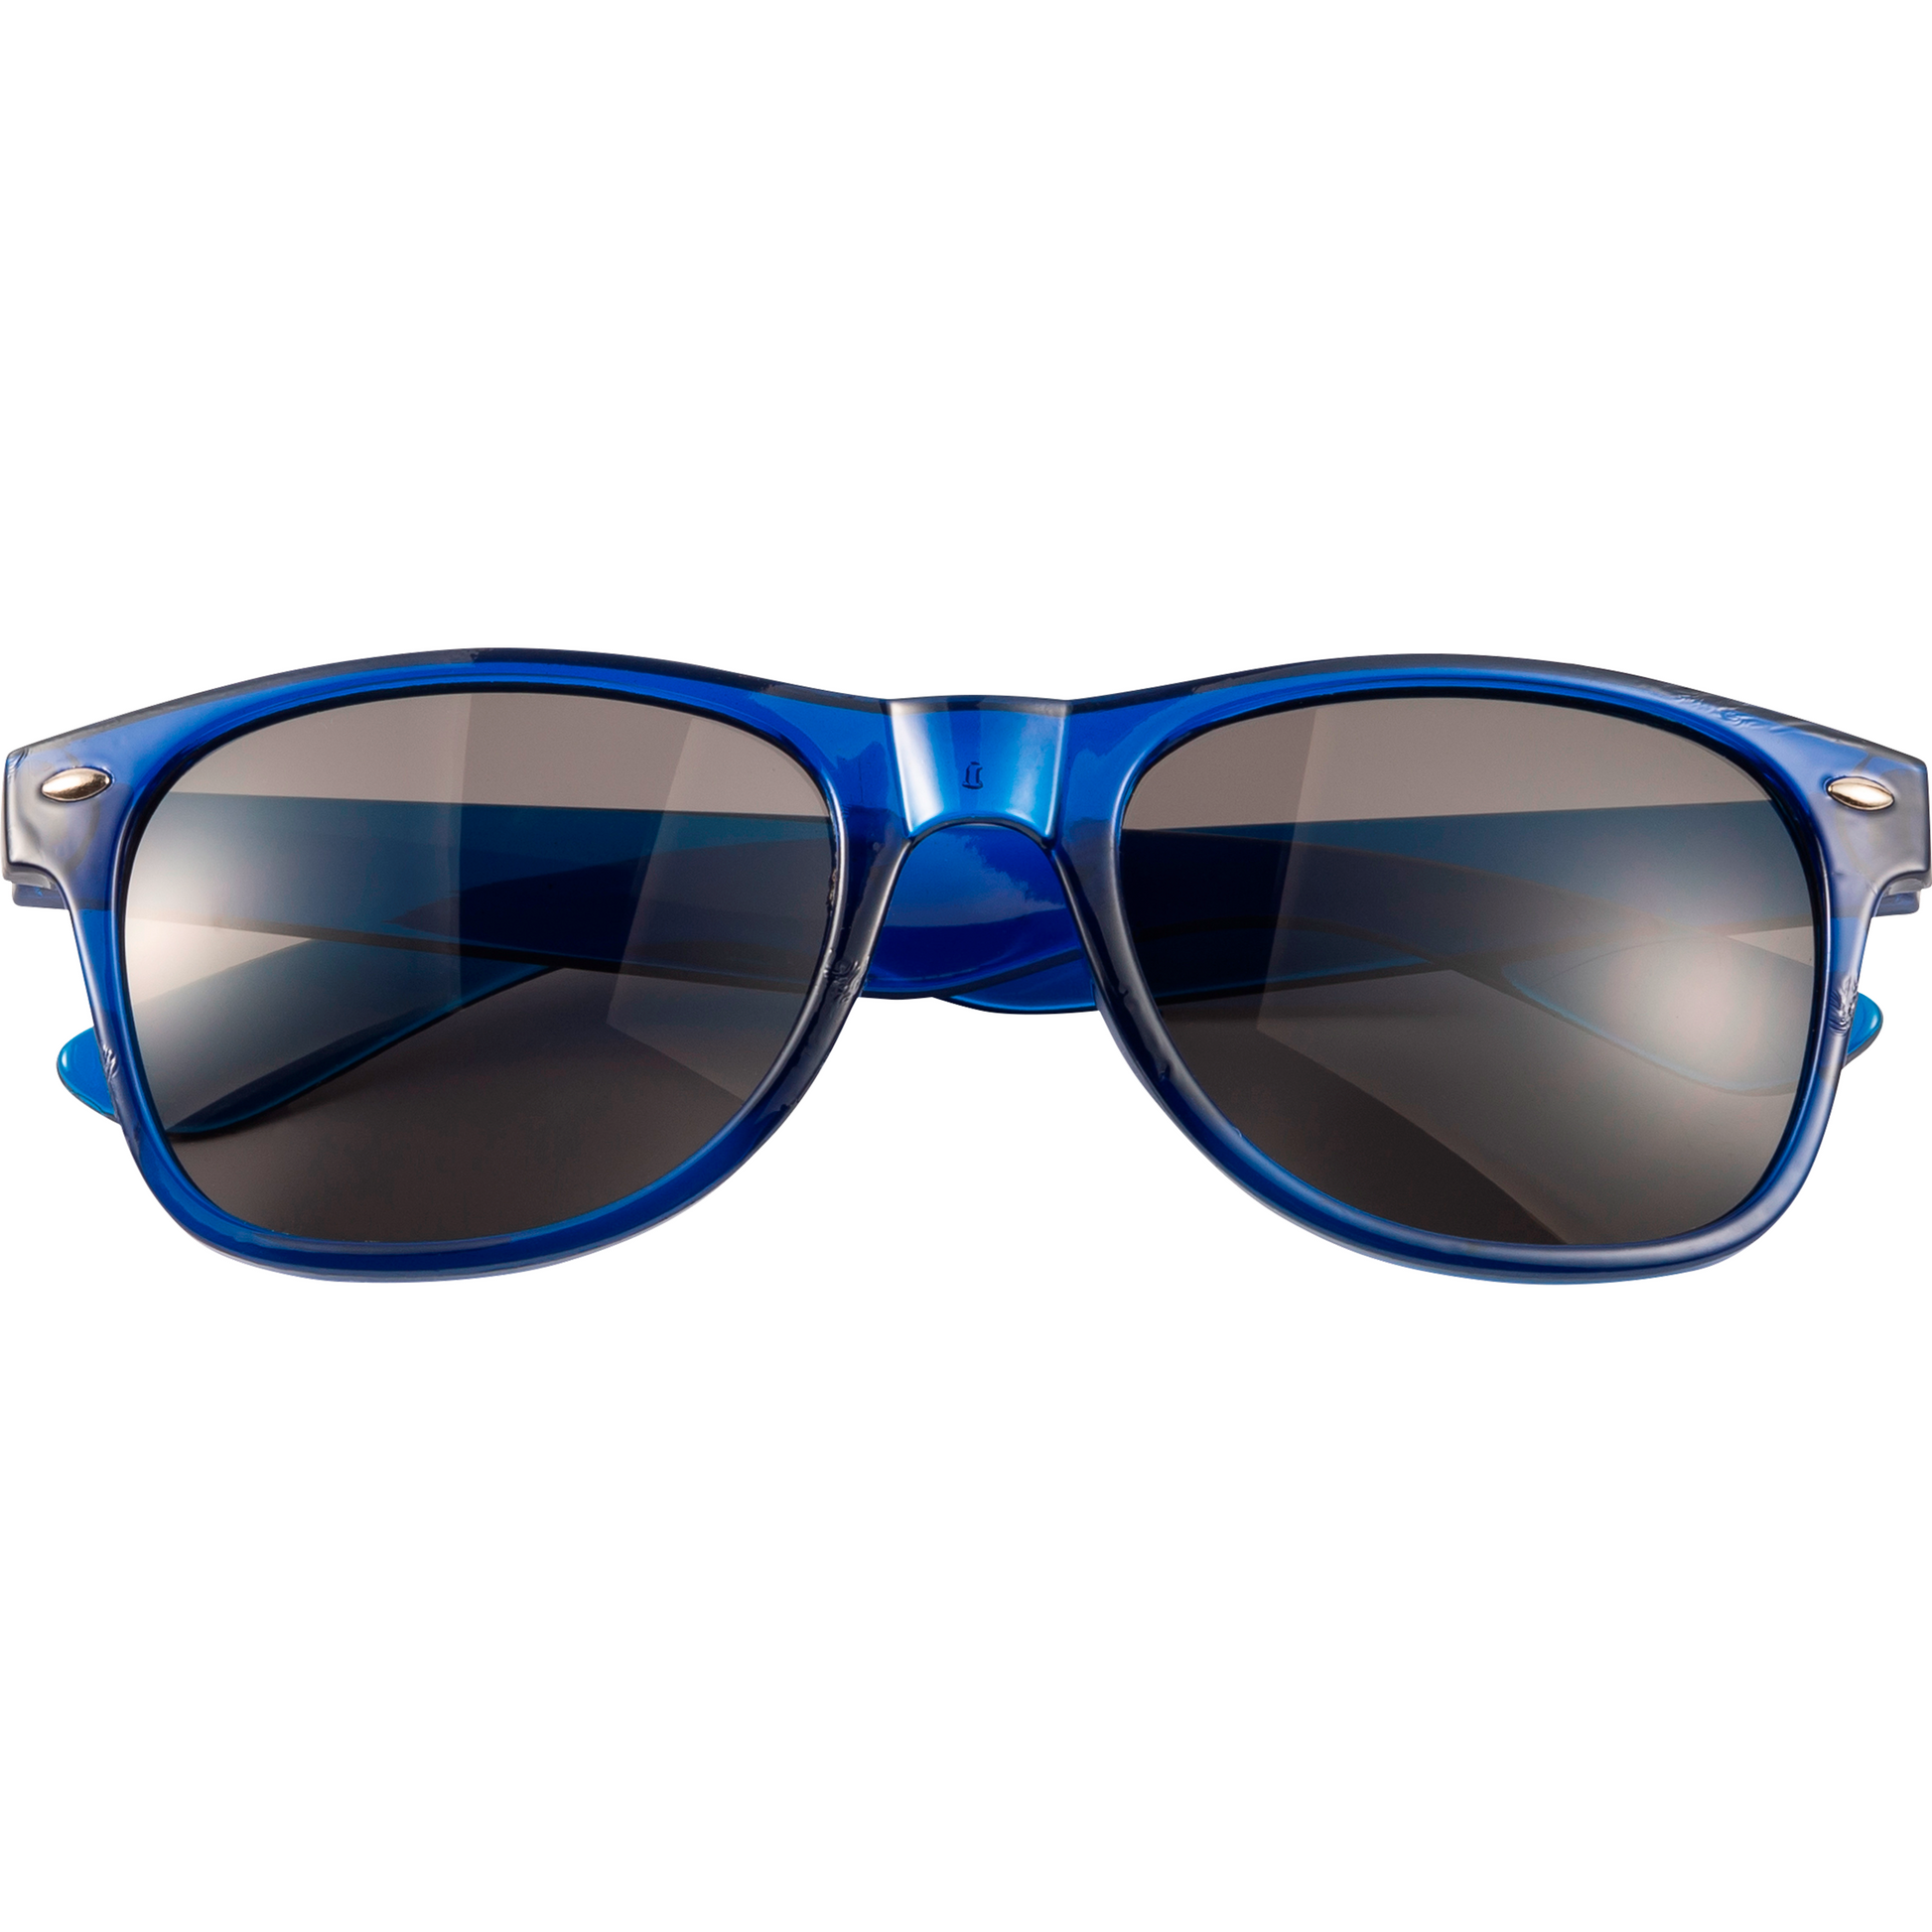 Acrylic sunglasses Sunglasses   